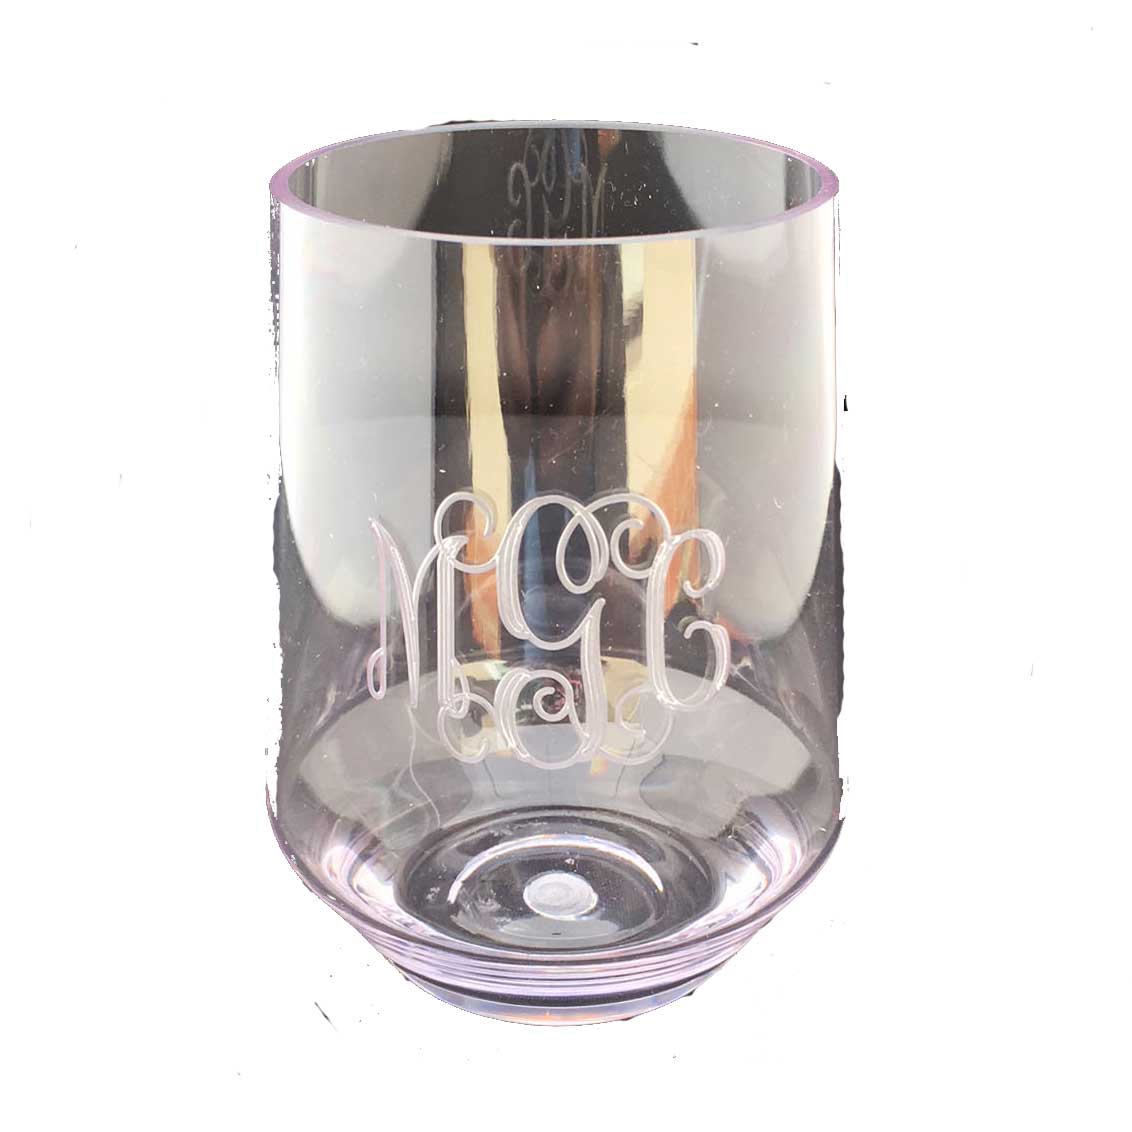 Personalized Acrylic Wine Glasses